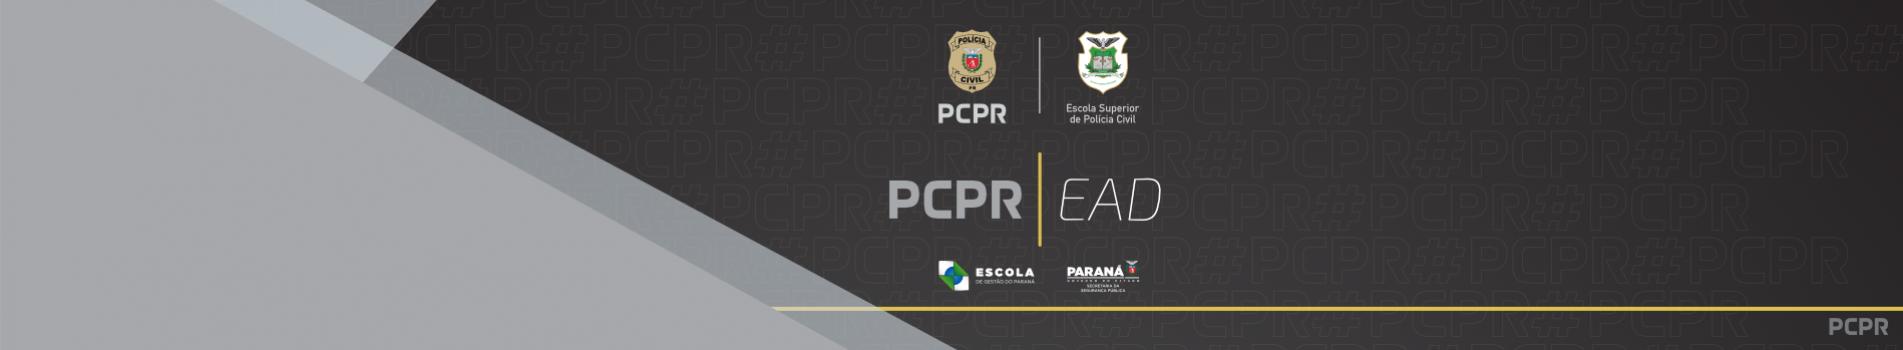 Banner - PCPR/ EAD